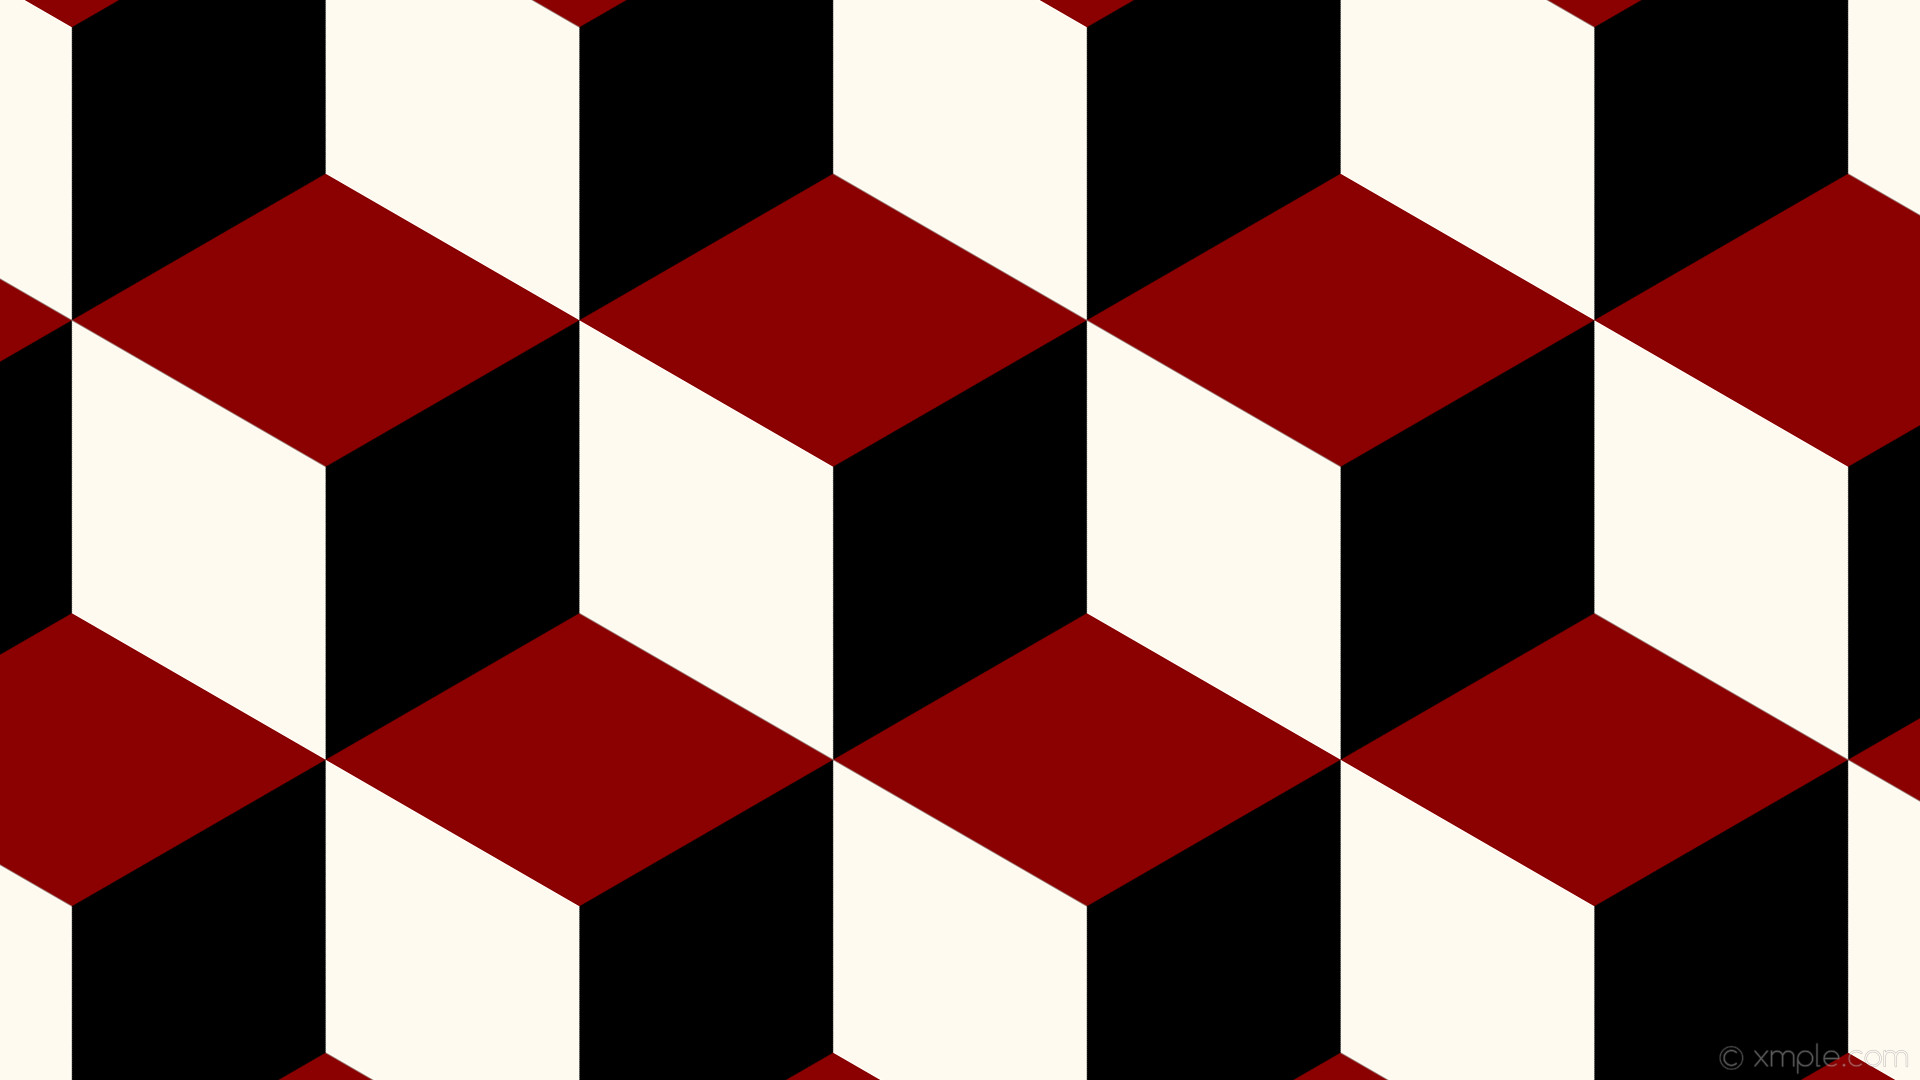 1920x1080 wallpaper red 3d cubes white black dark red floral white #000000 #8b0000  #fffaf0